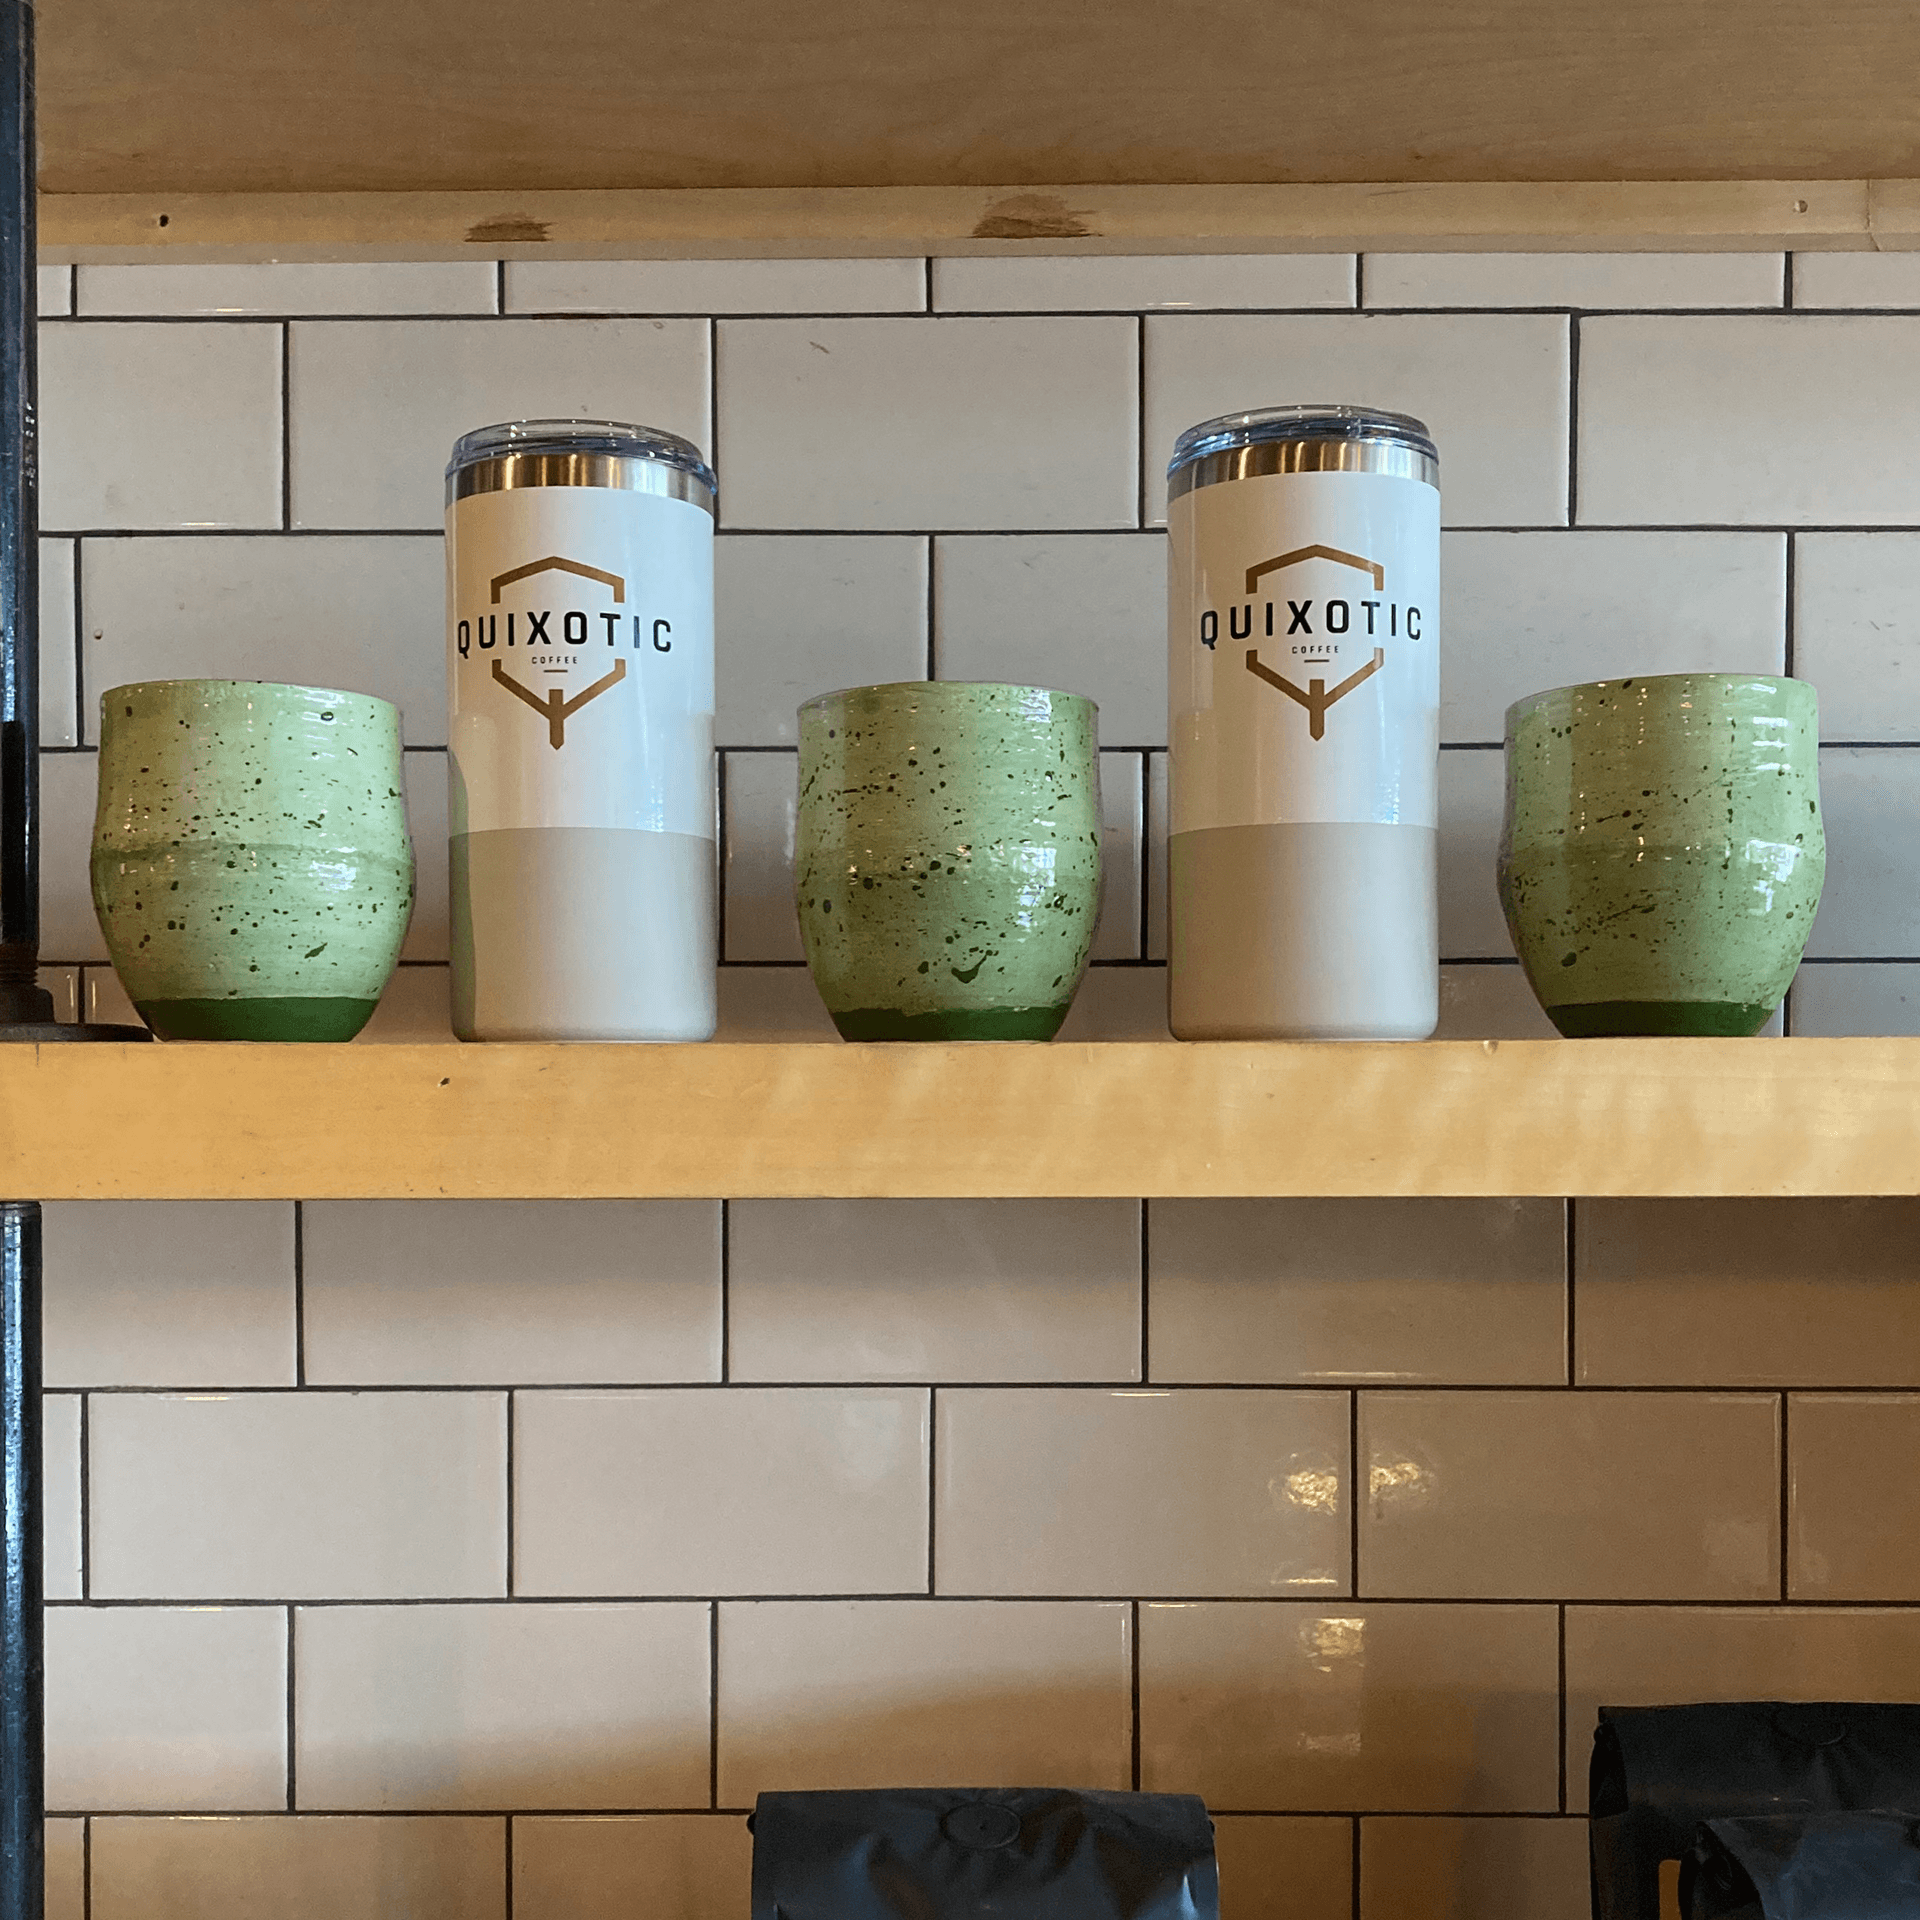 Display shelf with green ceramic mugs and coffee tumblers